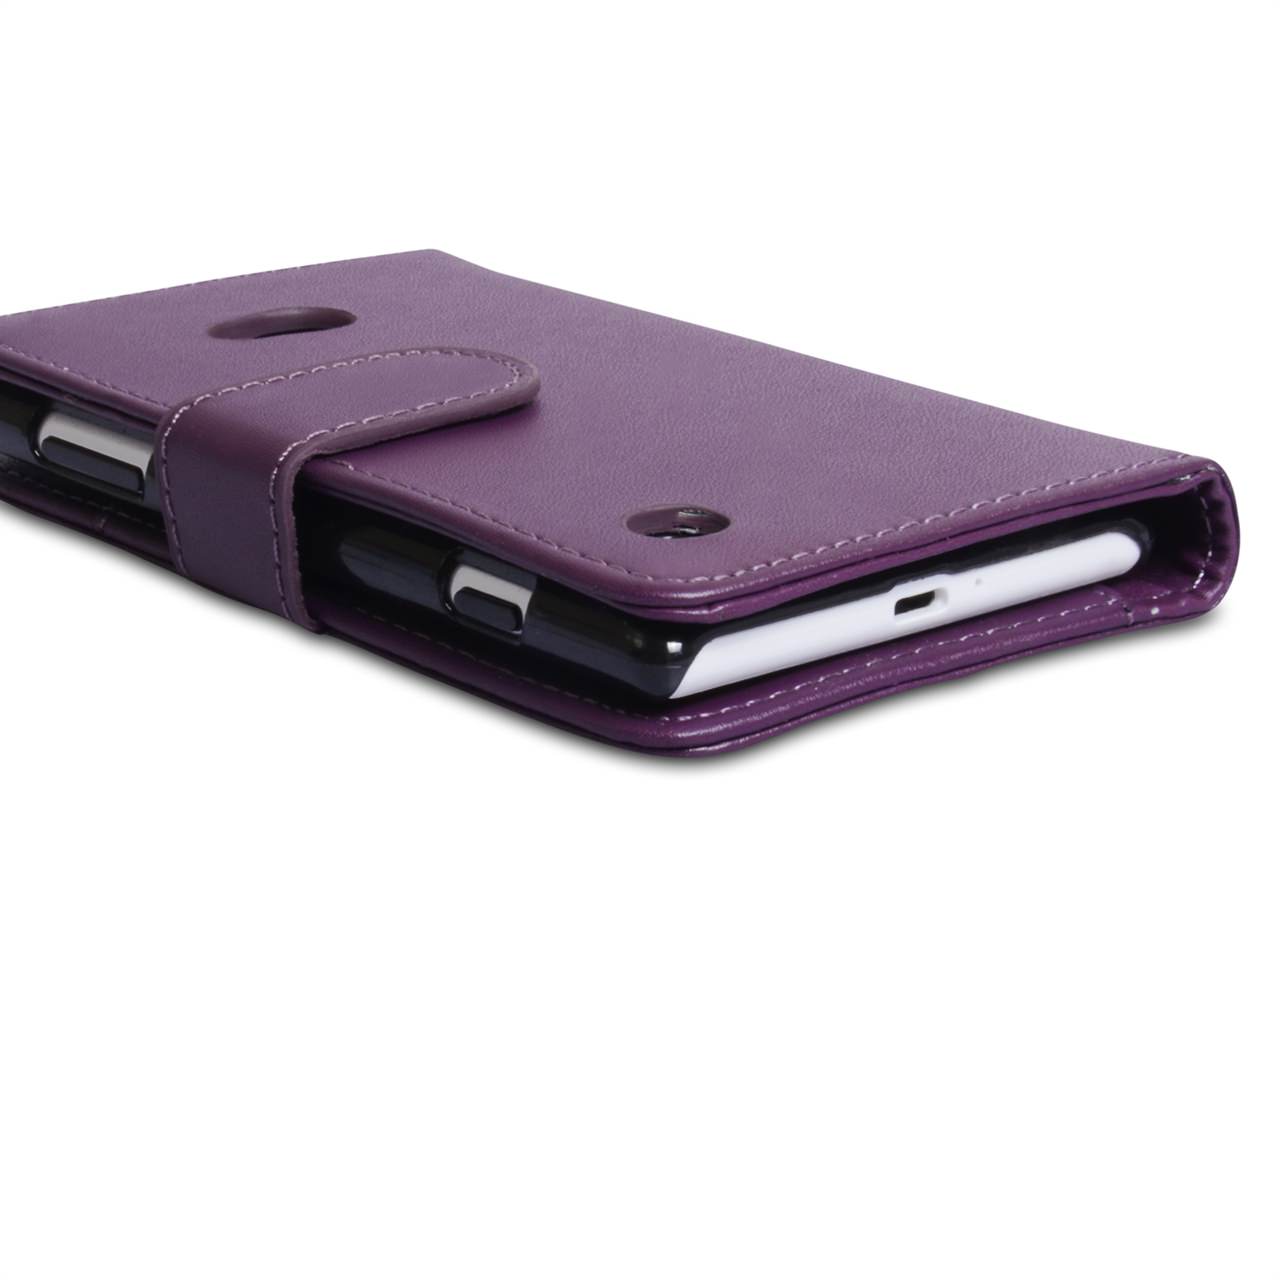 YouSave Nokia Lumia 720 Leather Effect Wallet Case - Purple